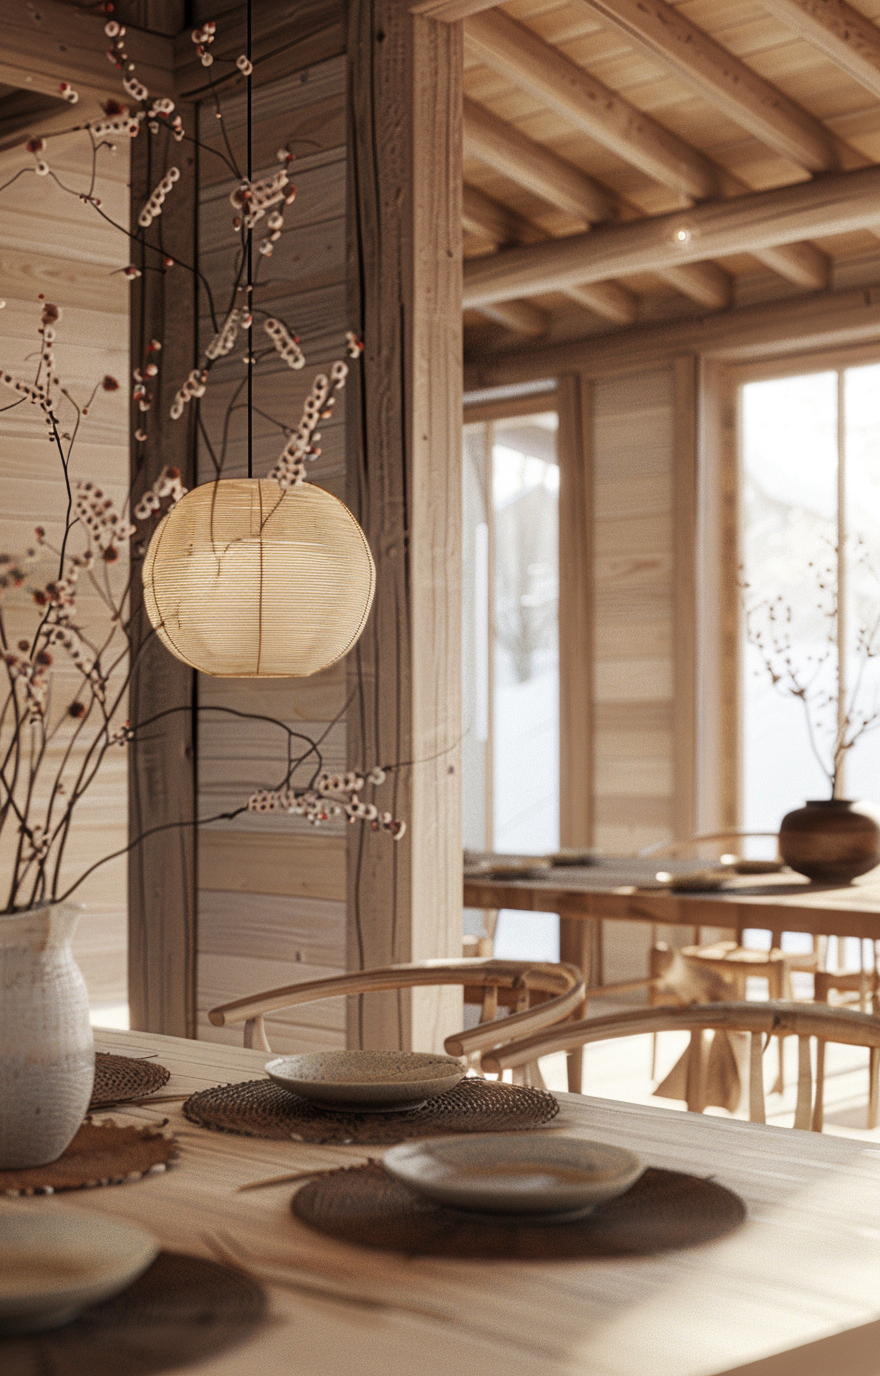 Sleek Japanese dining room with minimalist tableware on a wooden table